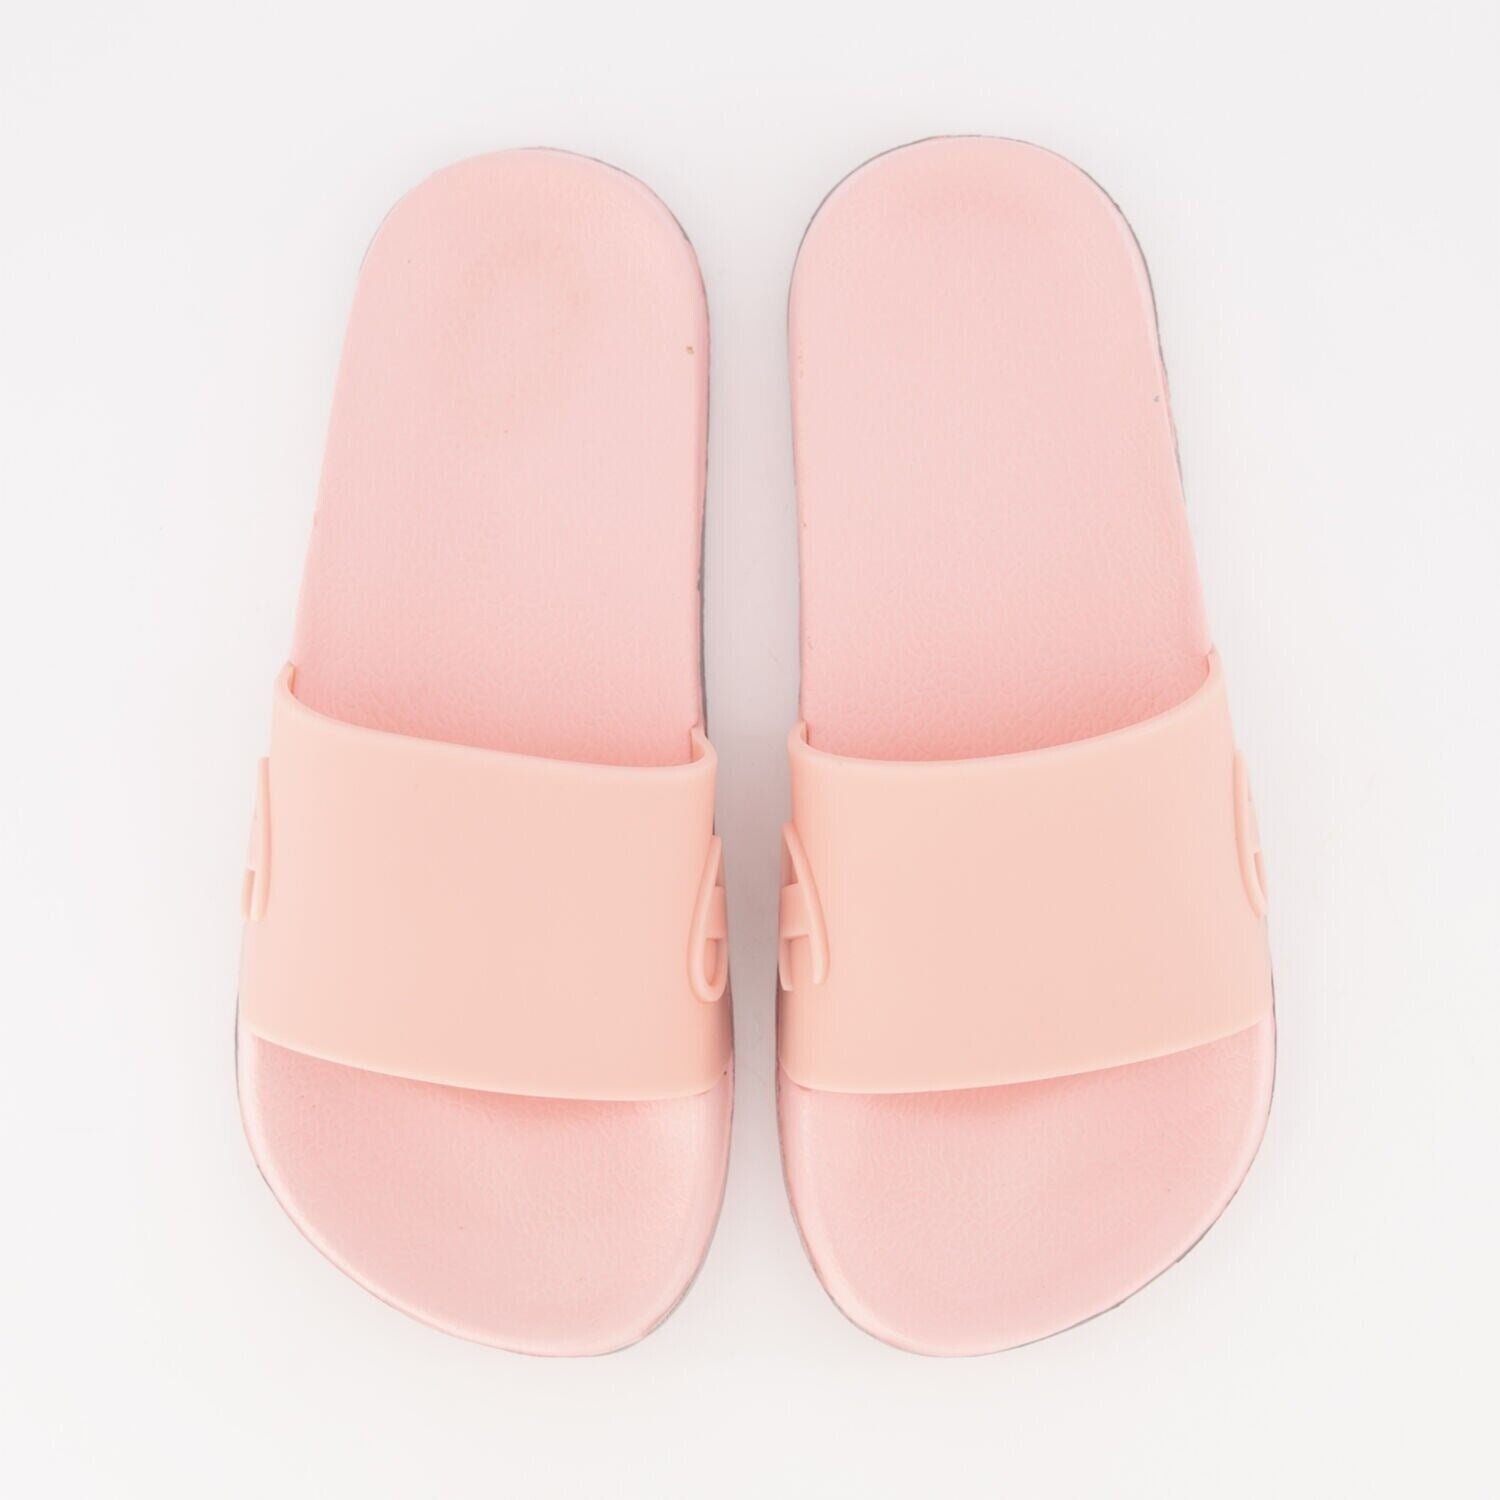 CHAMPION - CAMERON Womens Pool Sliders Summer Sandals, Light Pink, size UK 4